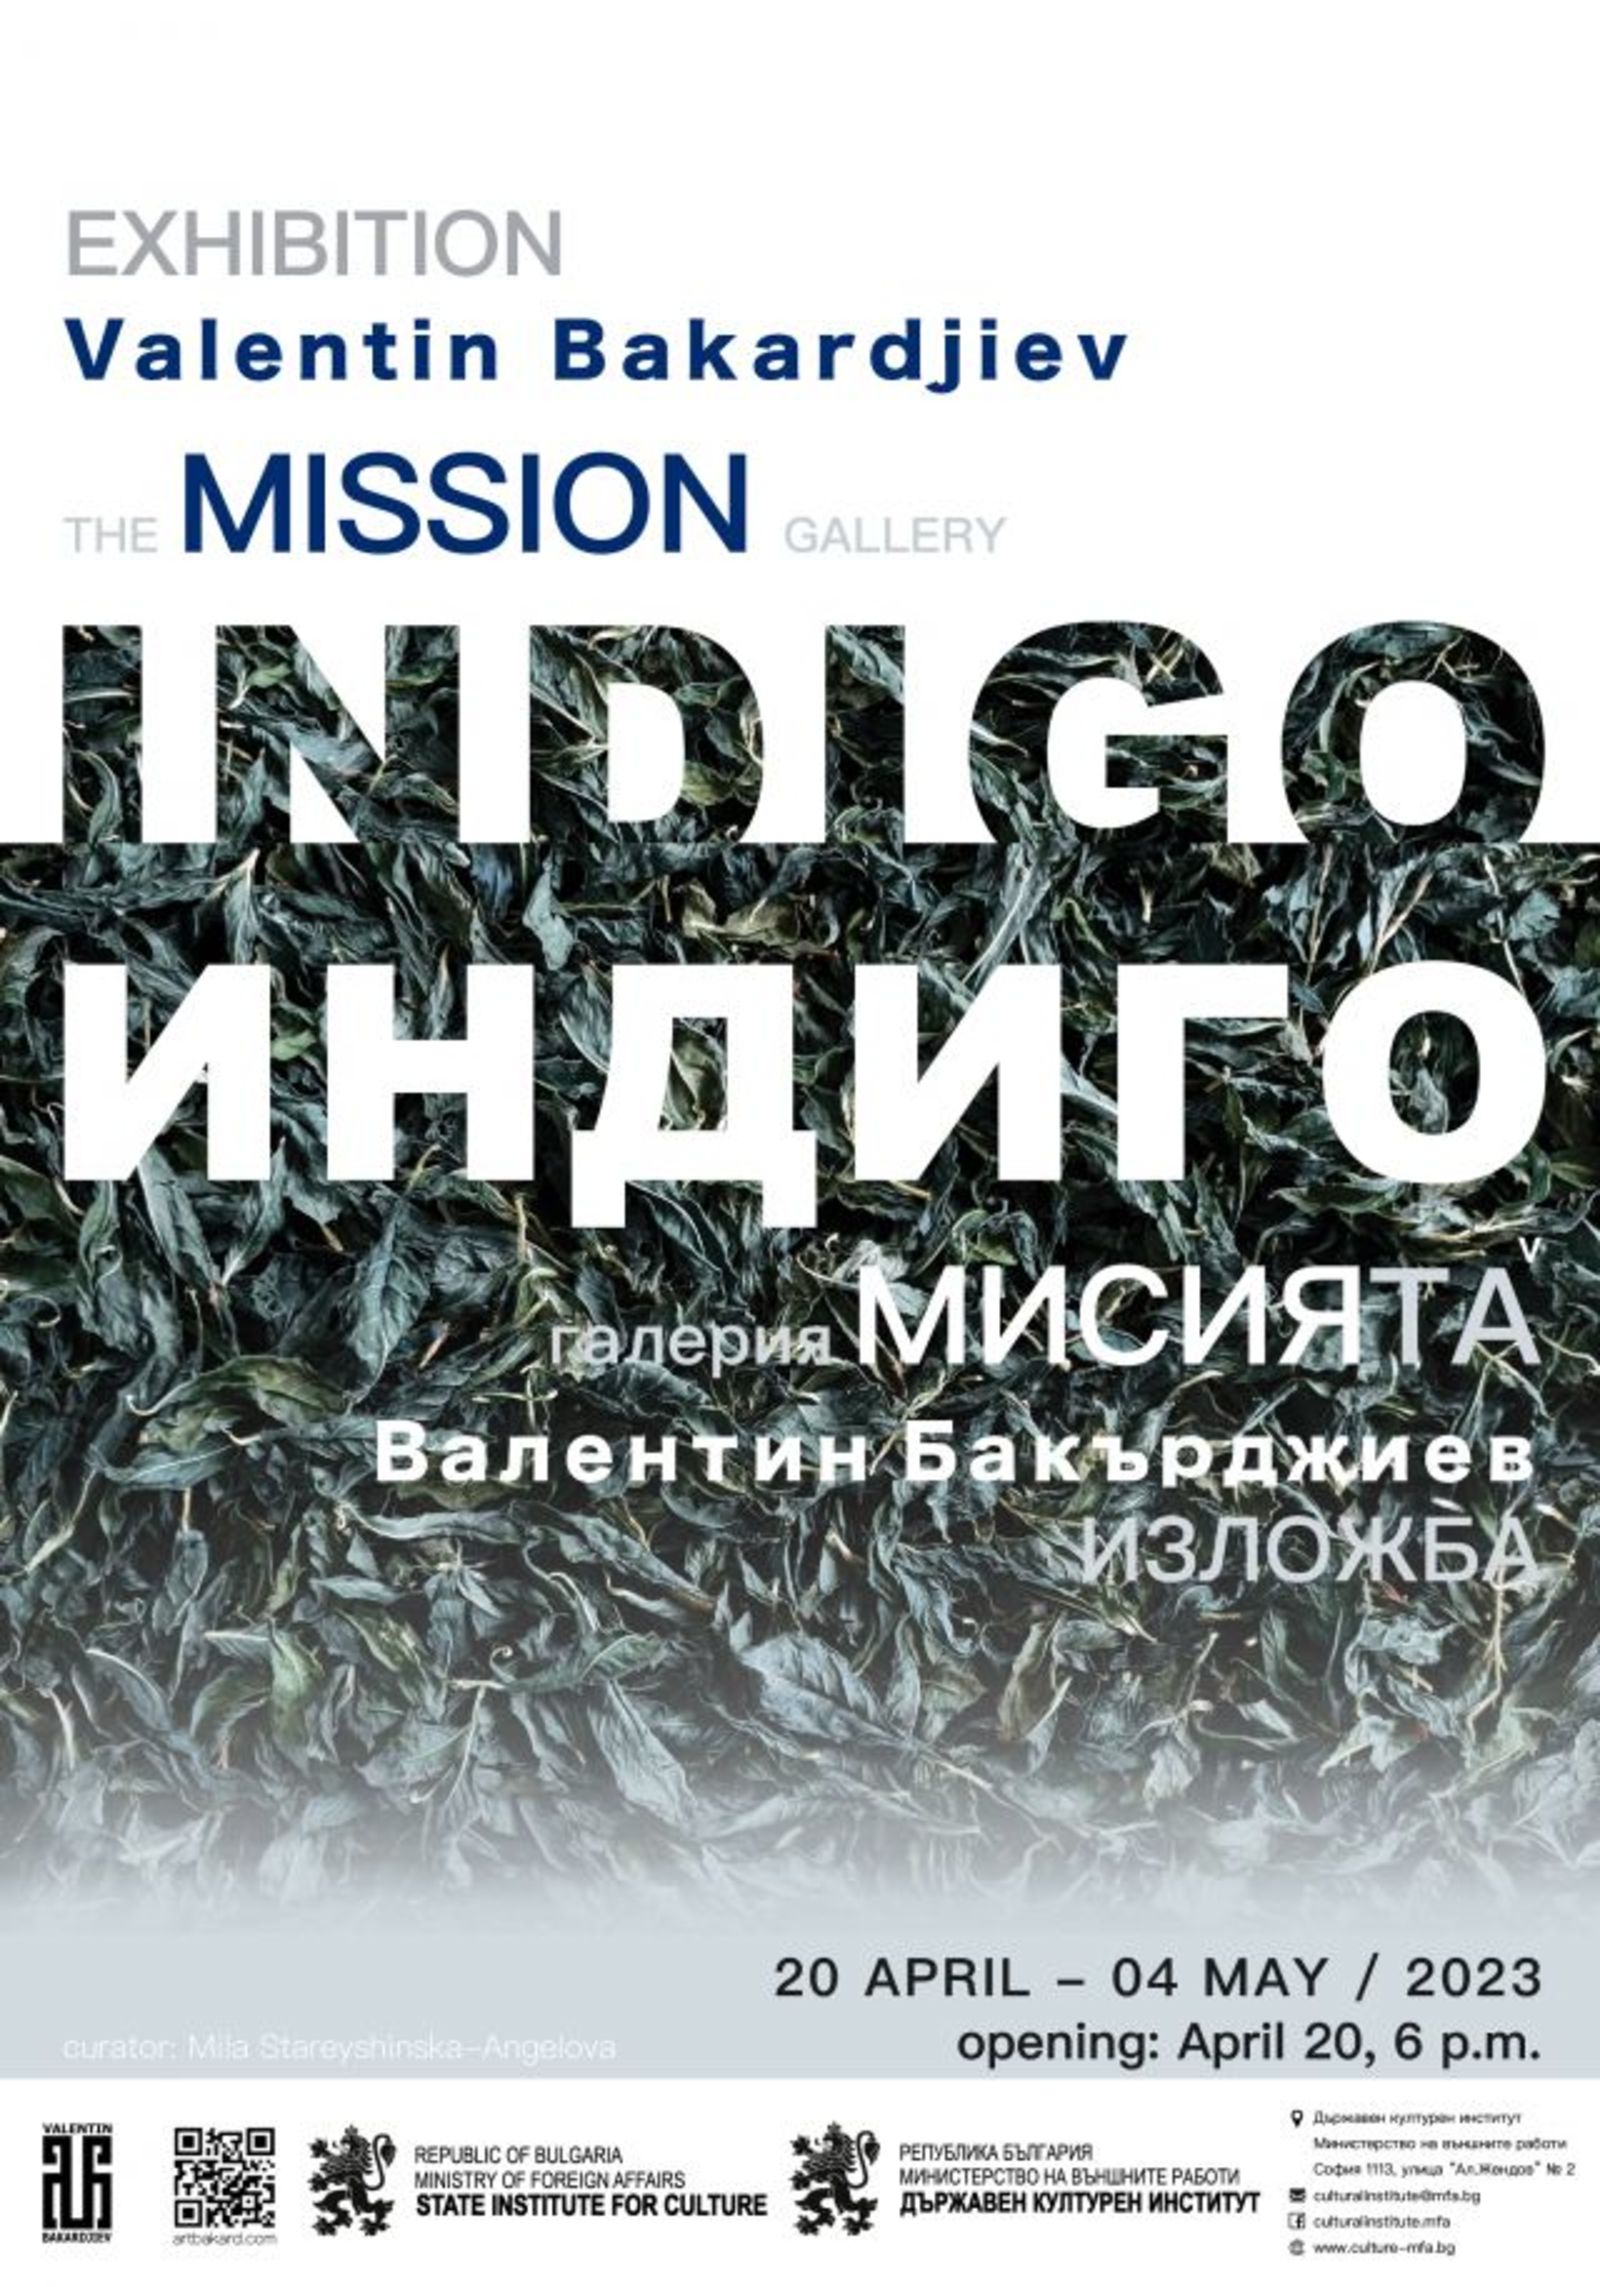 The Mission Gallery Presents the Exhibition "Indigo" by Valentin Bakardjiev